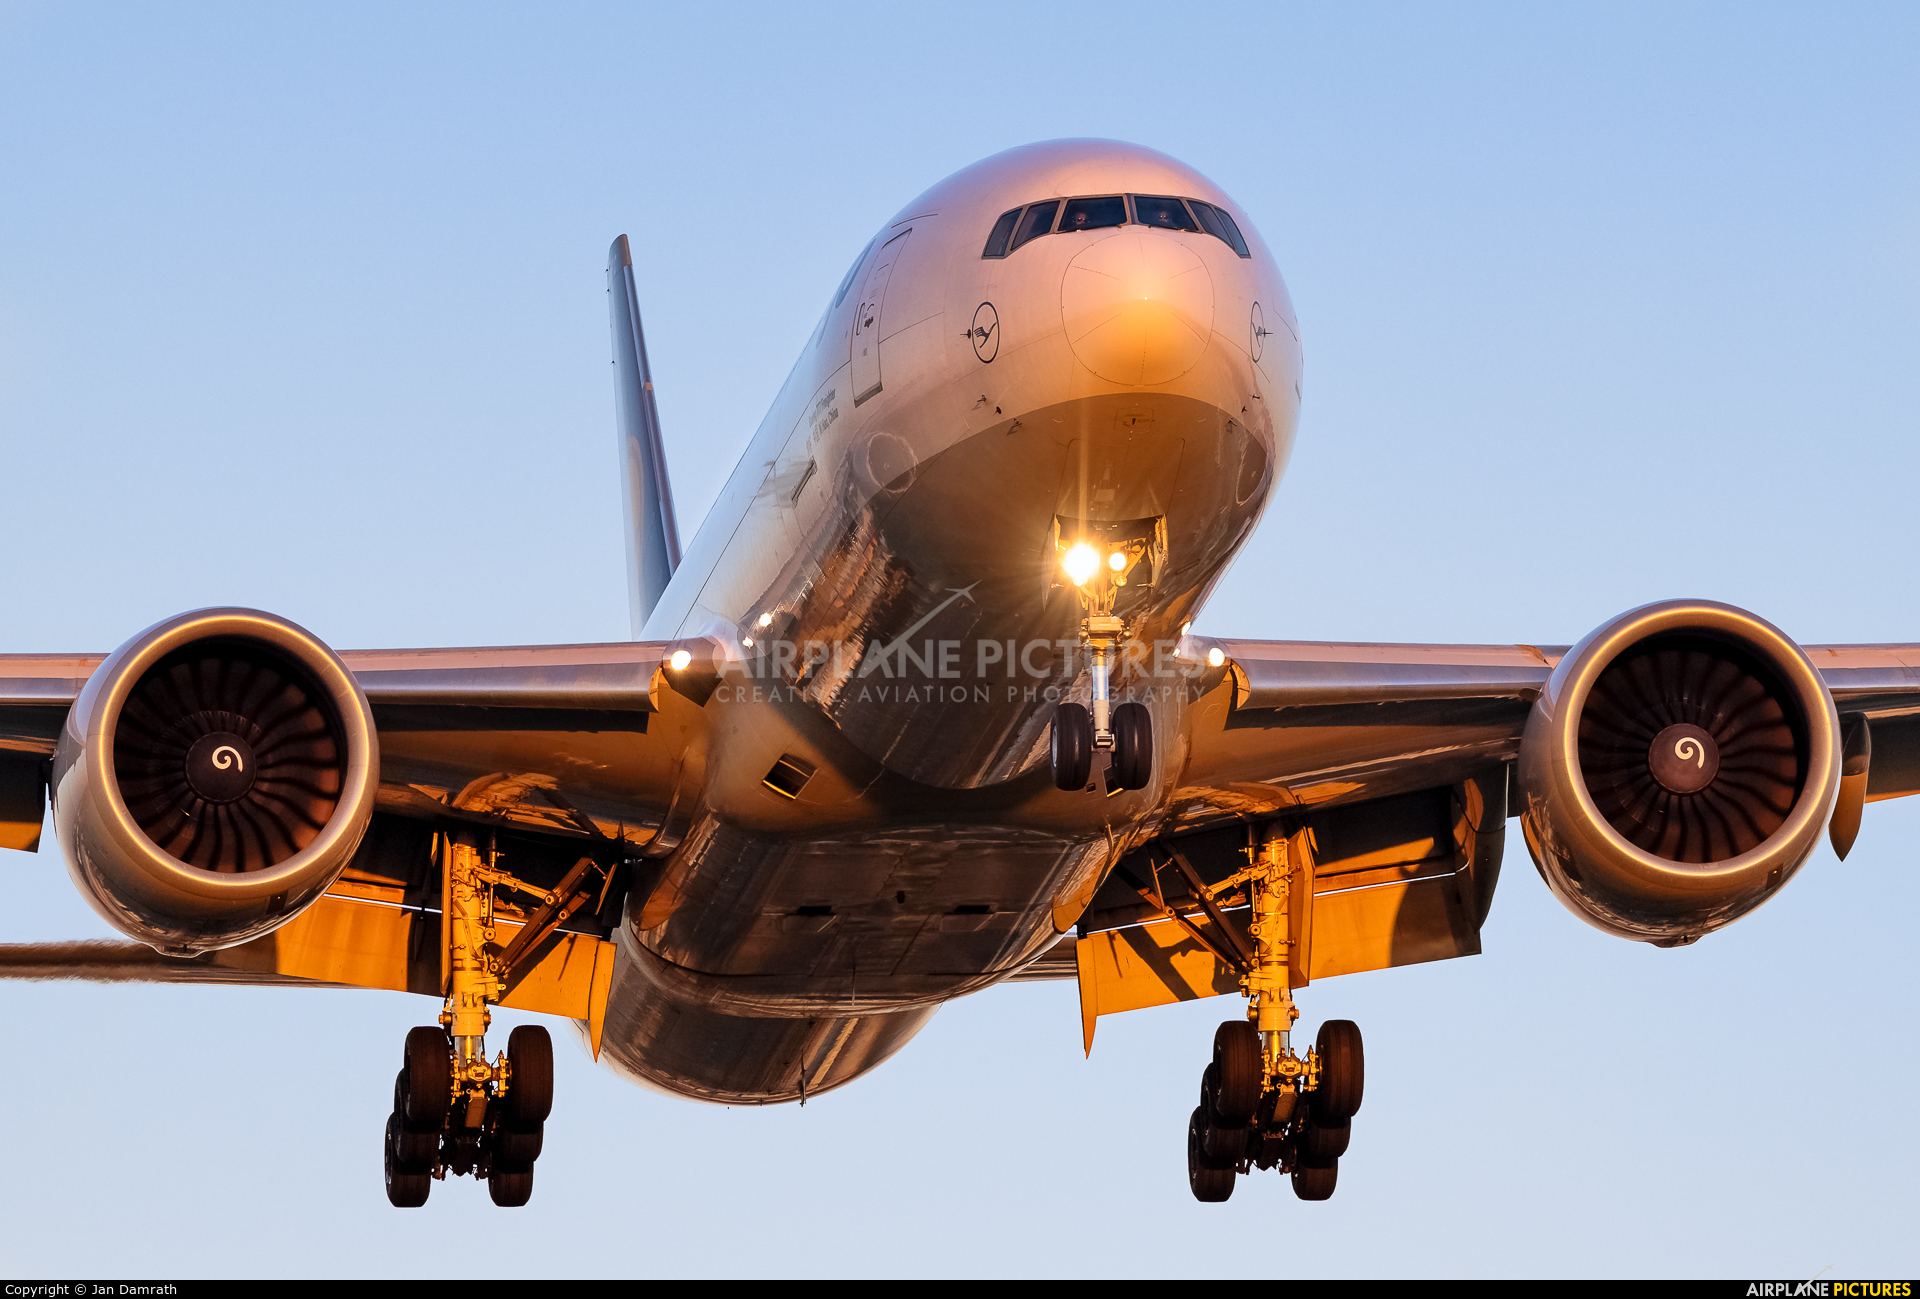 Lufthansa Cargo D-ALFC aircraft at Frankfurt